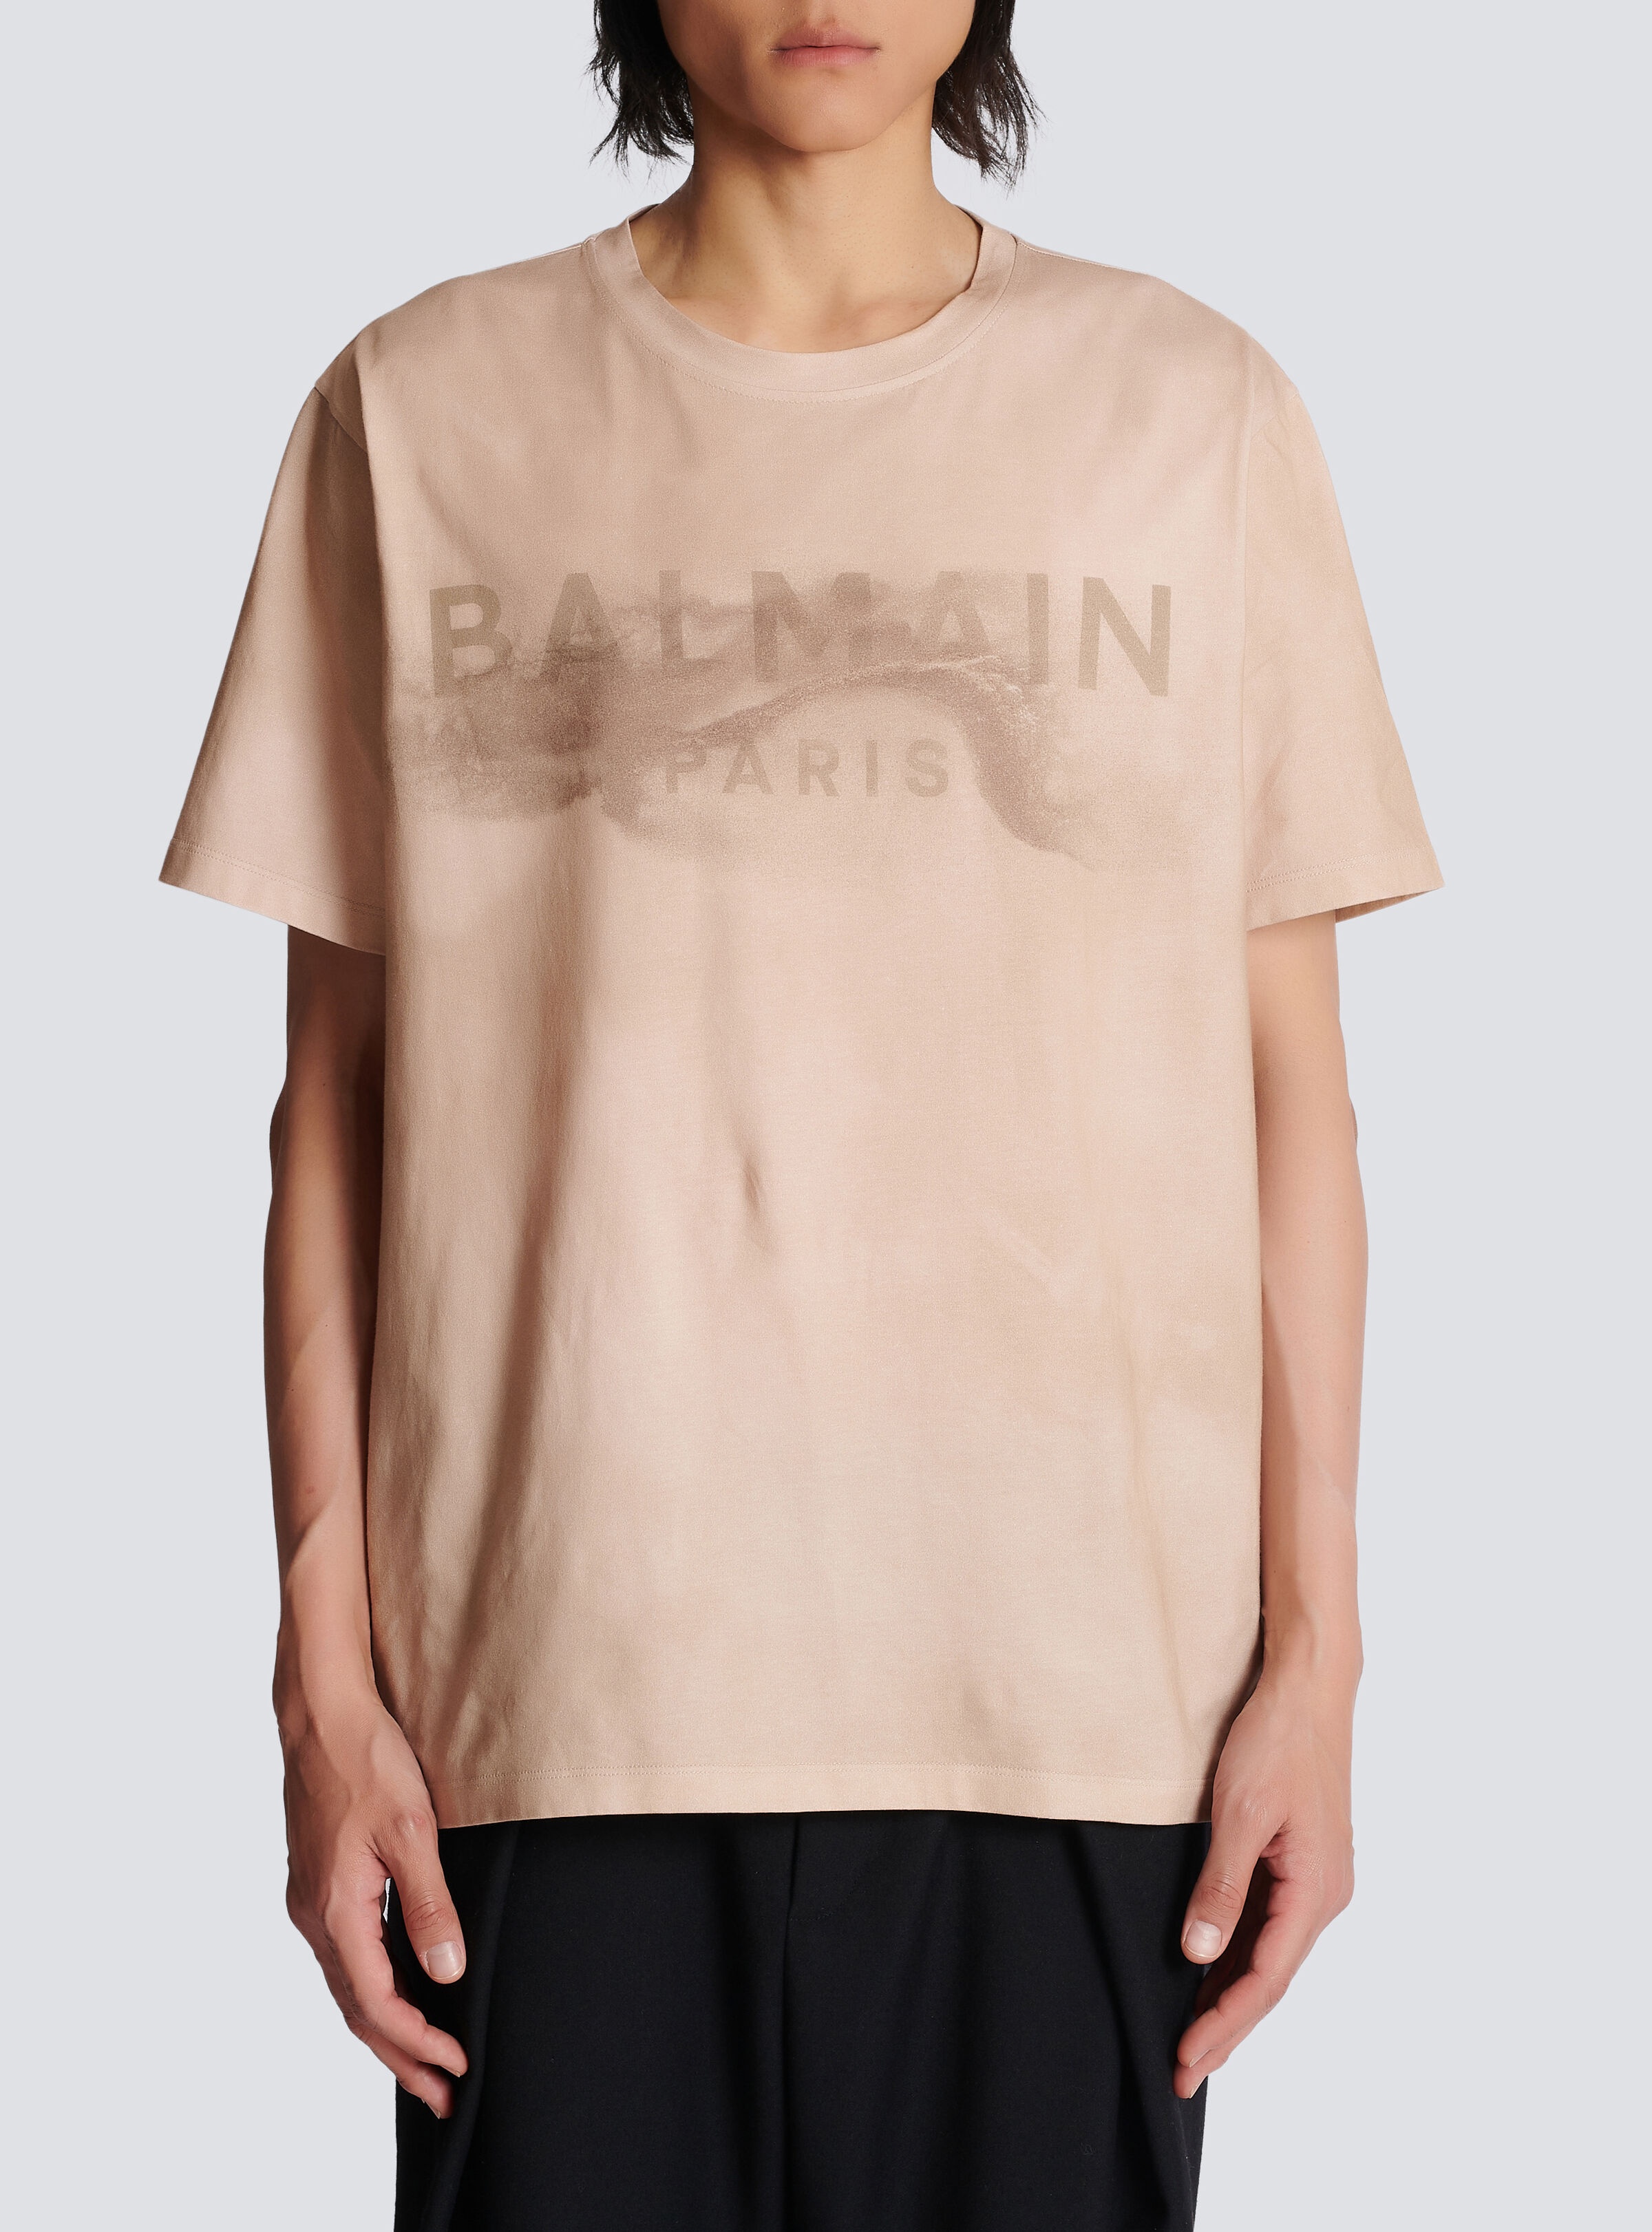 T-shirt in eco-responsible cotton with Balmain Paris desert logo - 5